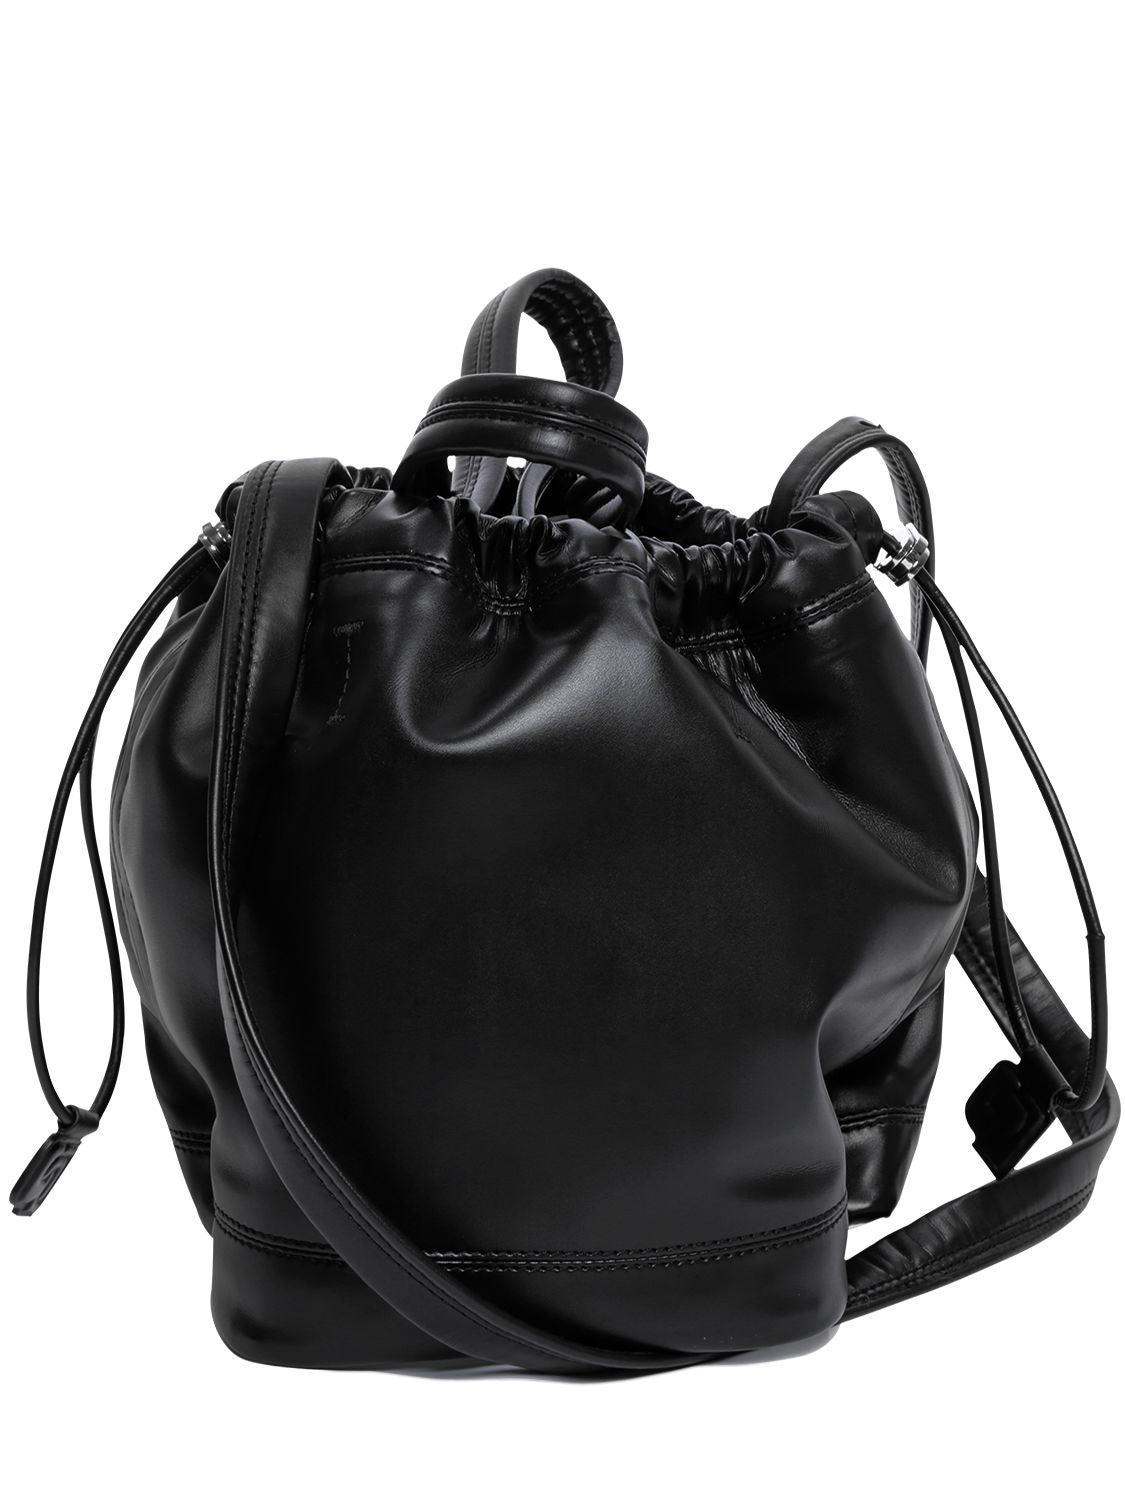 Paco Rabanne Medium Leather Bag In Black/silver